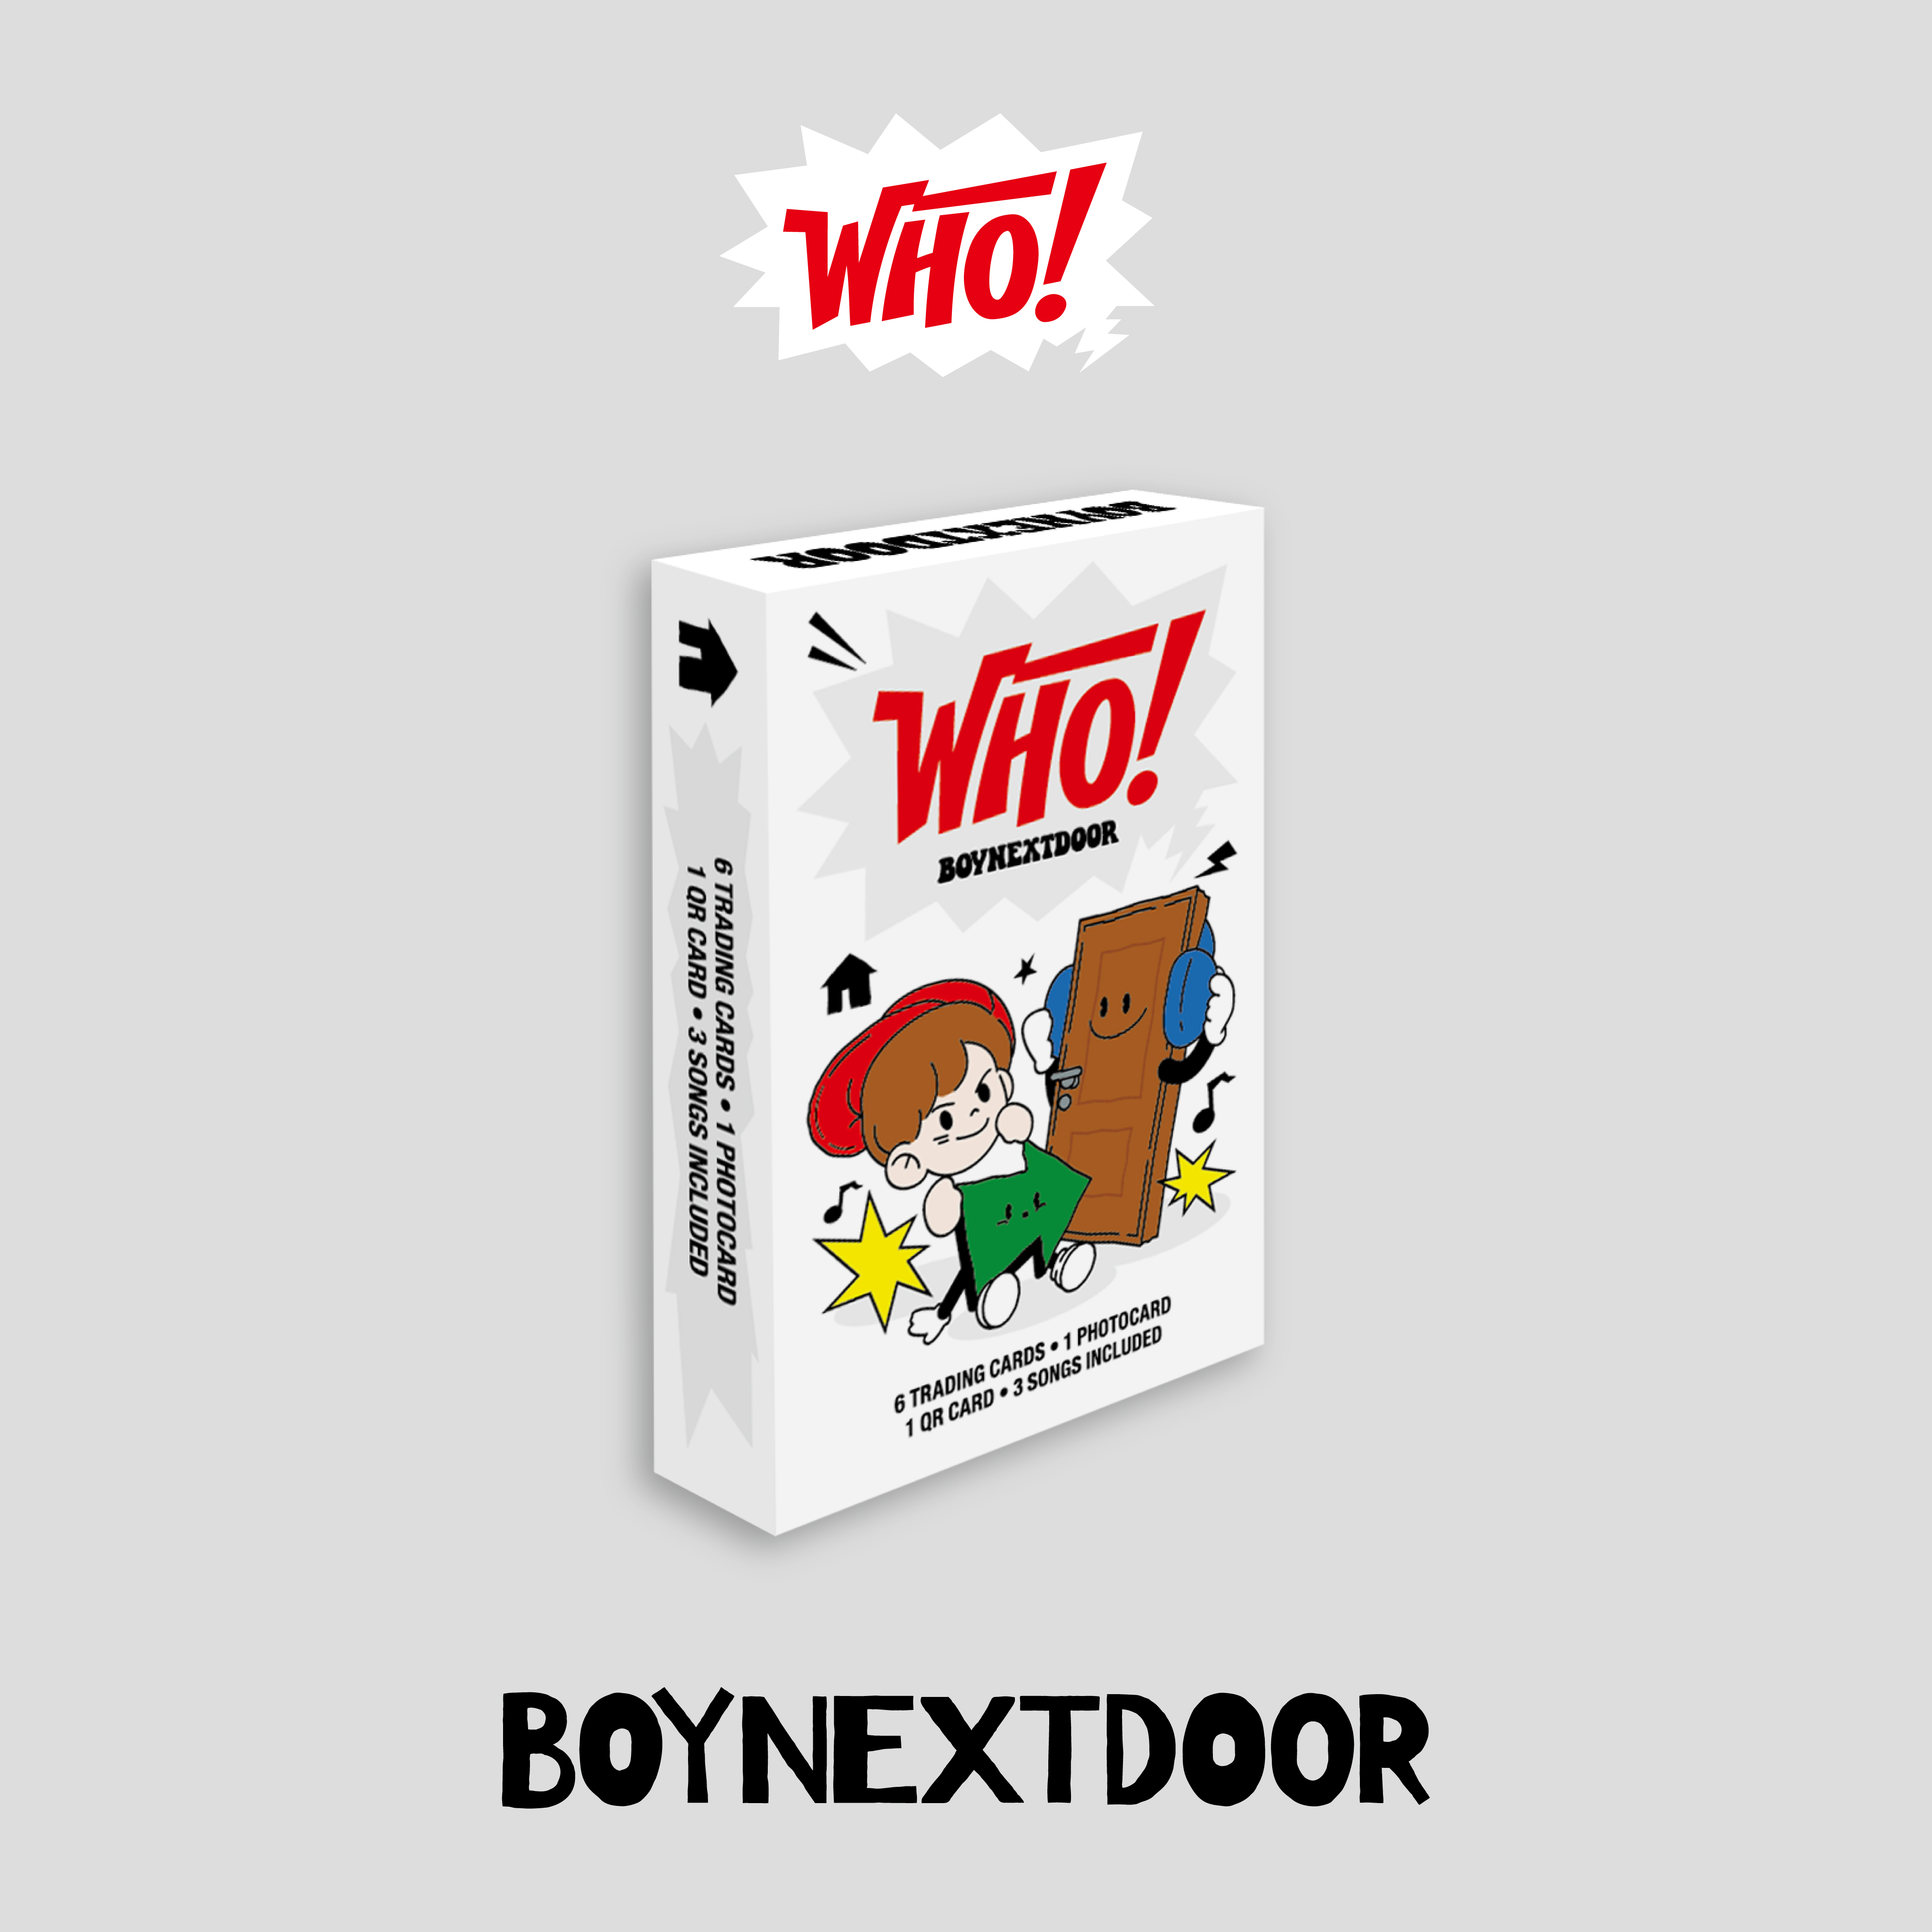 BOY NEXT DOOR ウナク Weverse トレカ www.sudouestprimeurs.fr